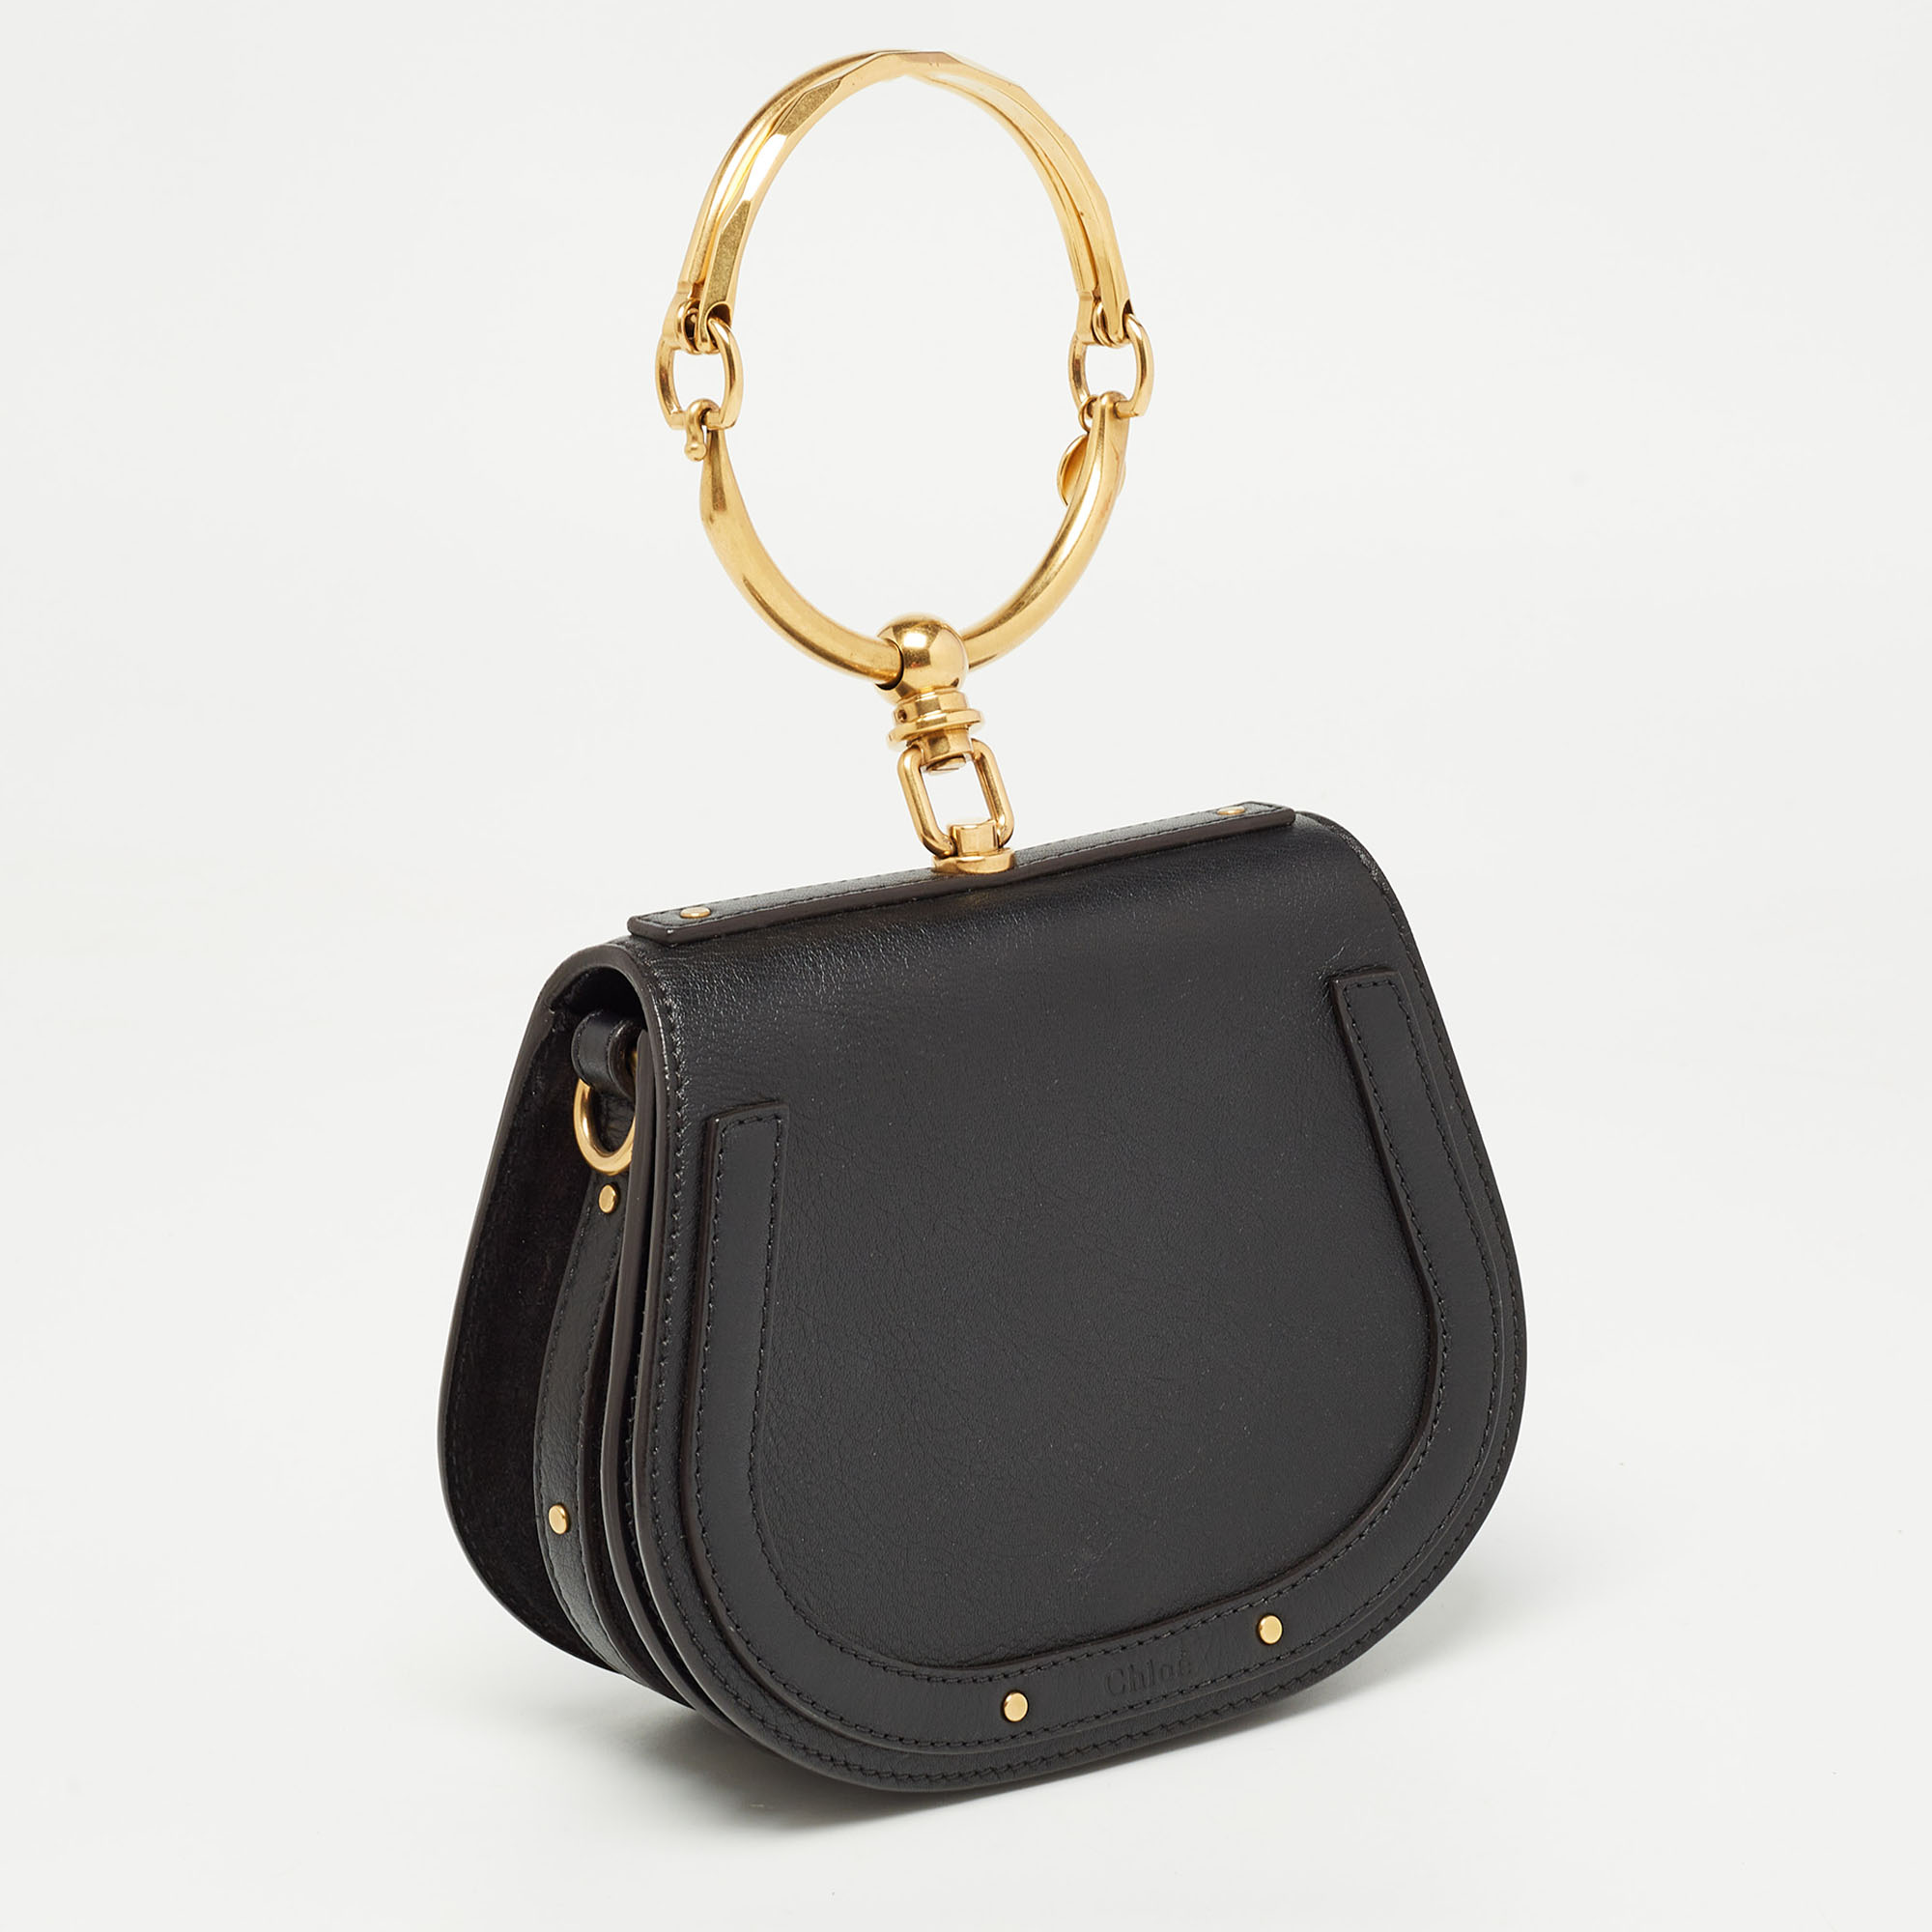 Chloe Black Leather Small Nile Bracelet Bag